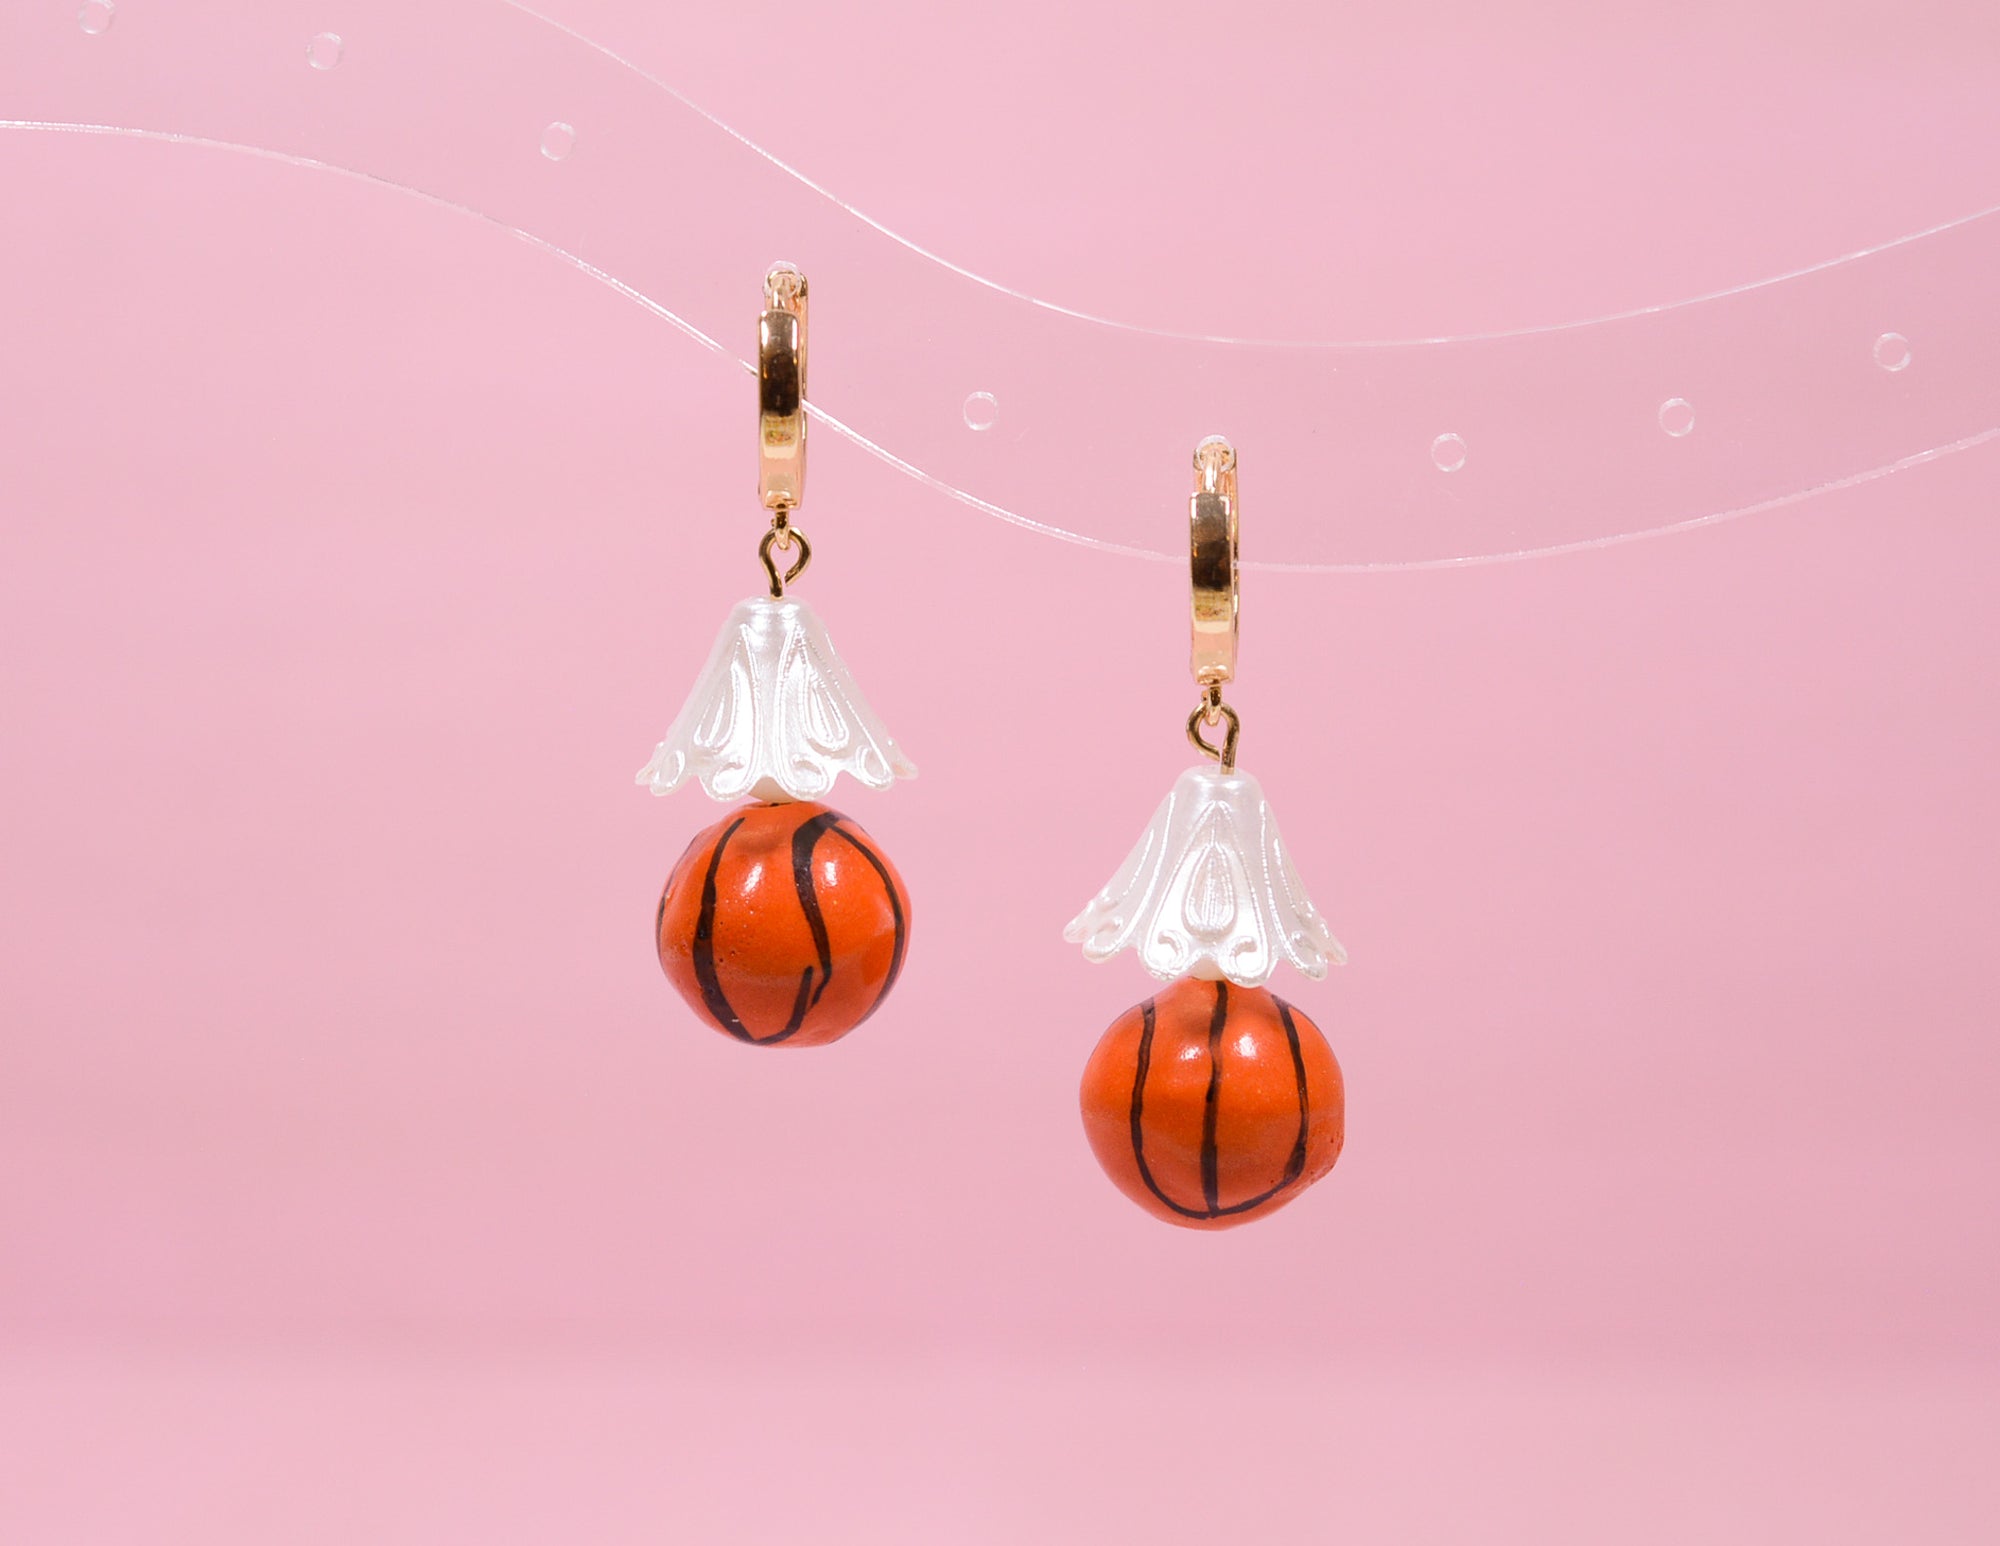 Basketball Lamps Earrings